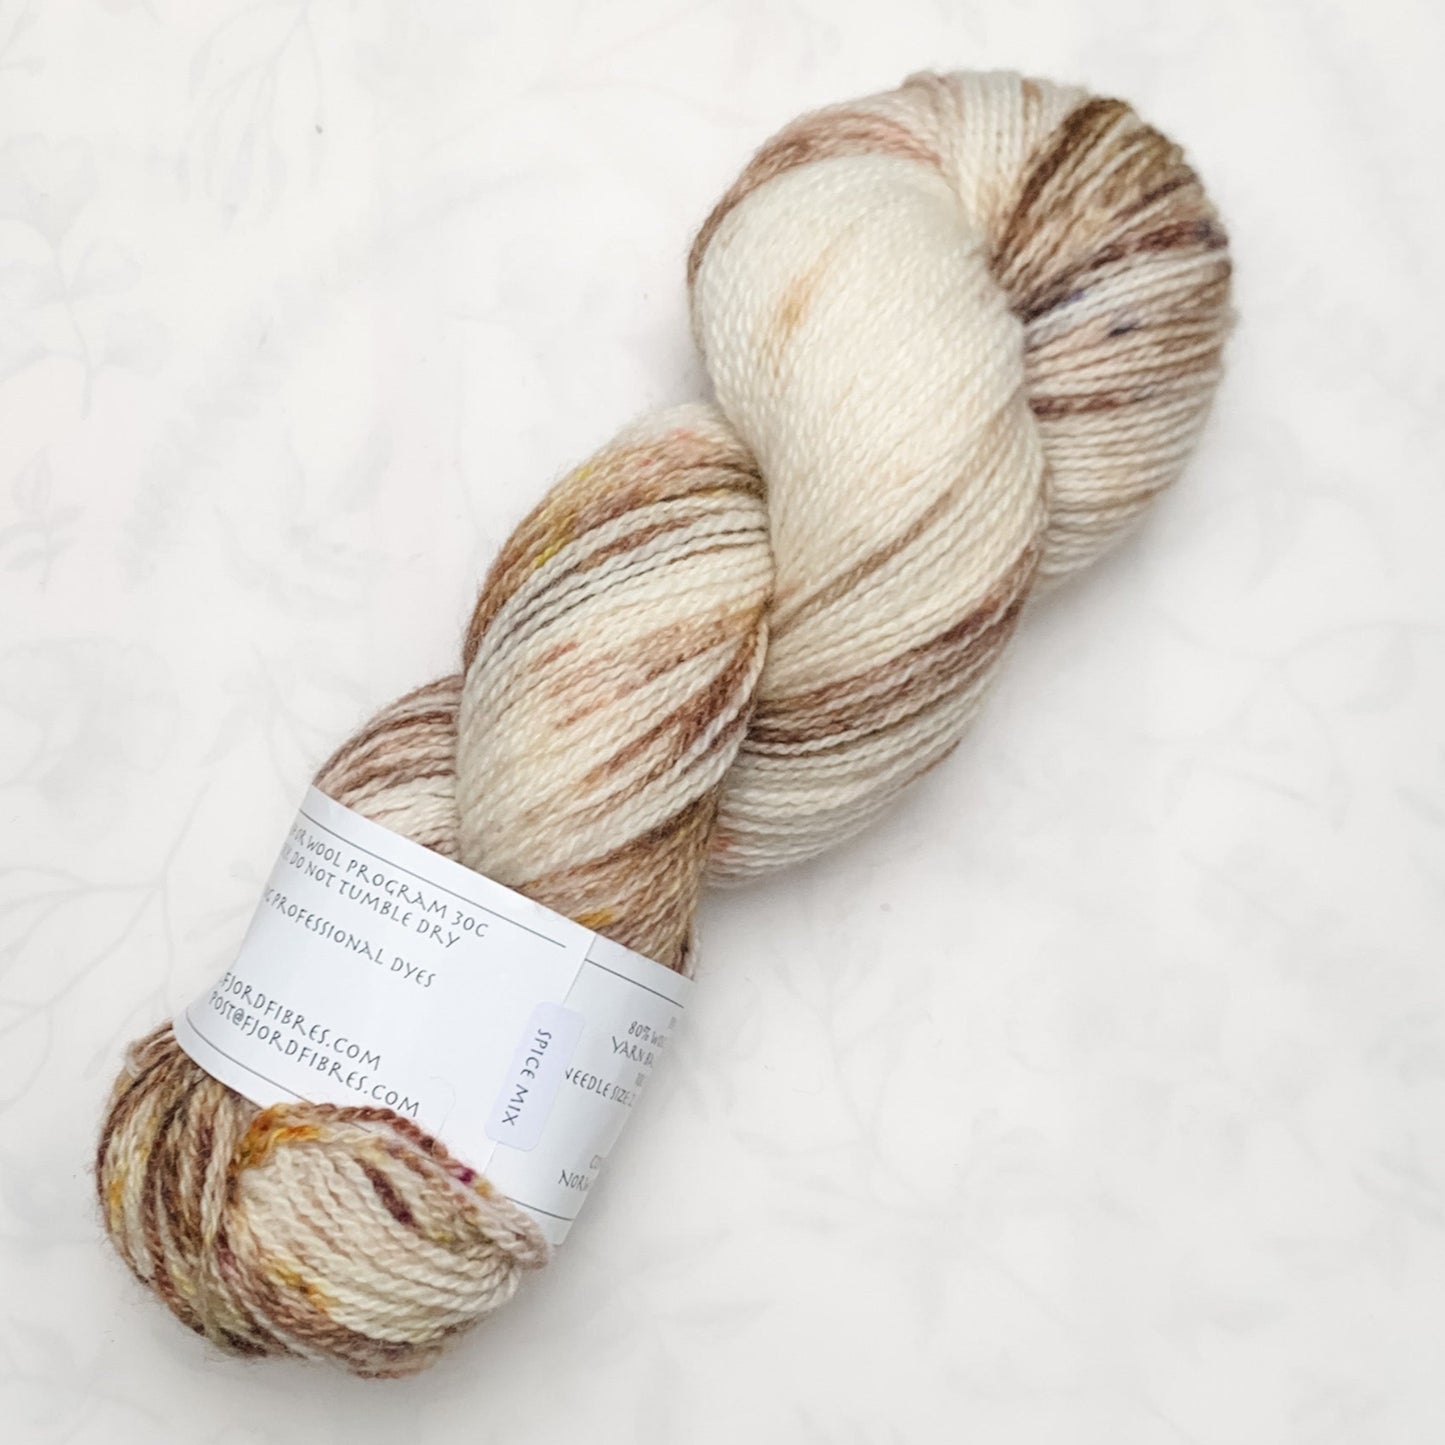 Krokan Is - Trollfjord sock - Hand Dyed Yarn - Variegated Yarn